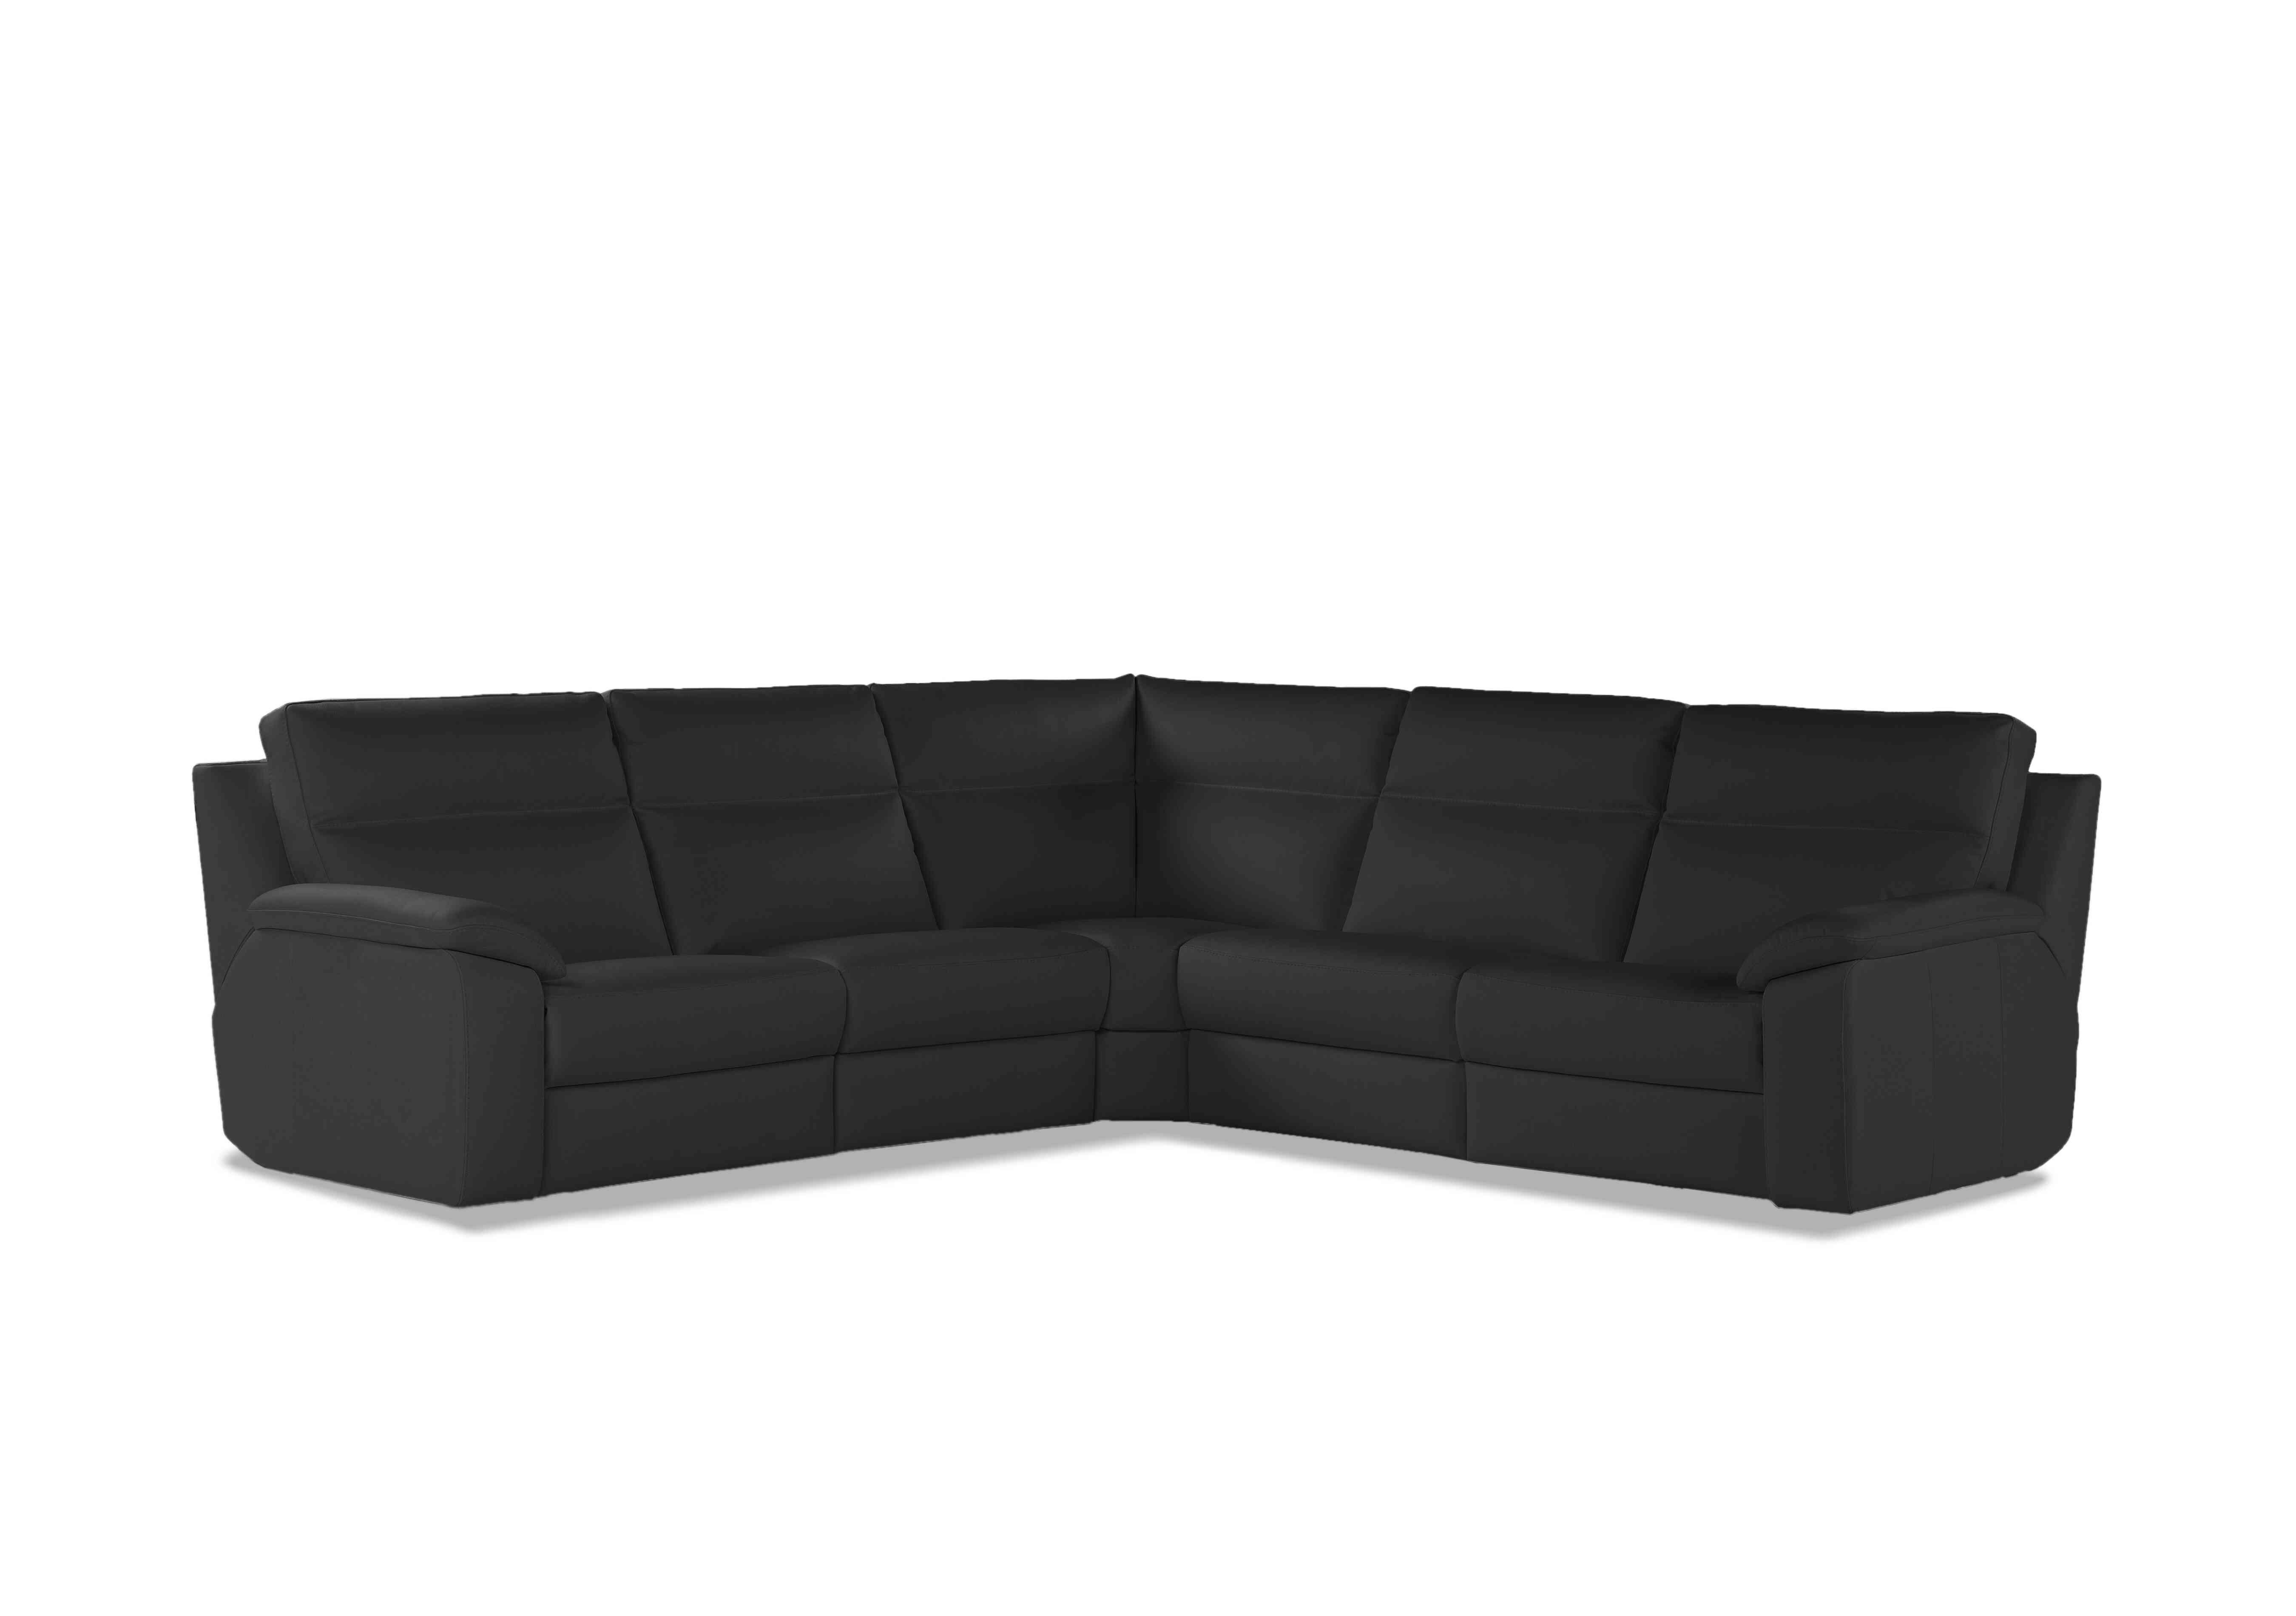 Pepino Large Leather Corner Sofa in 71 Torello Nero on Furniture Village